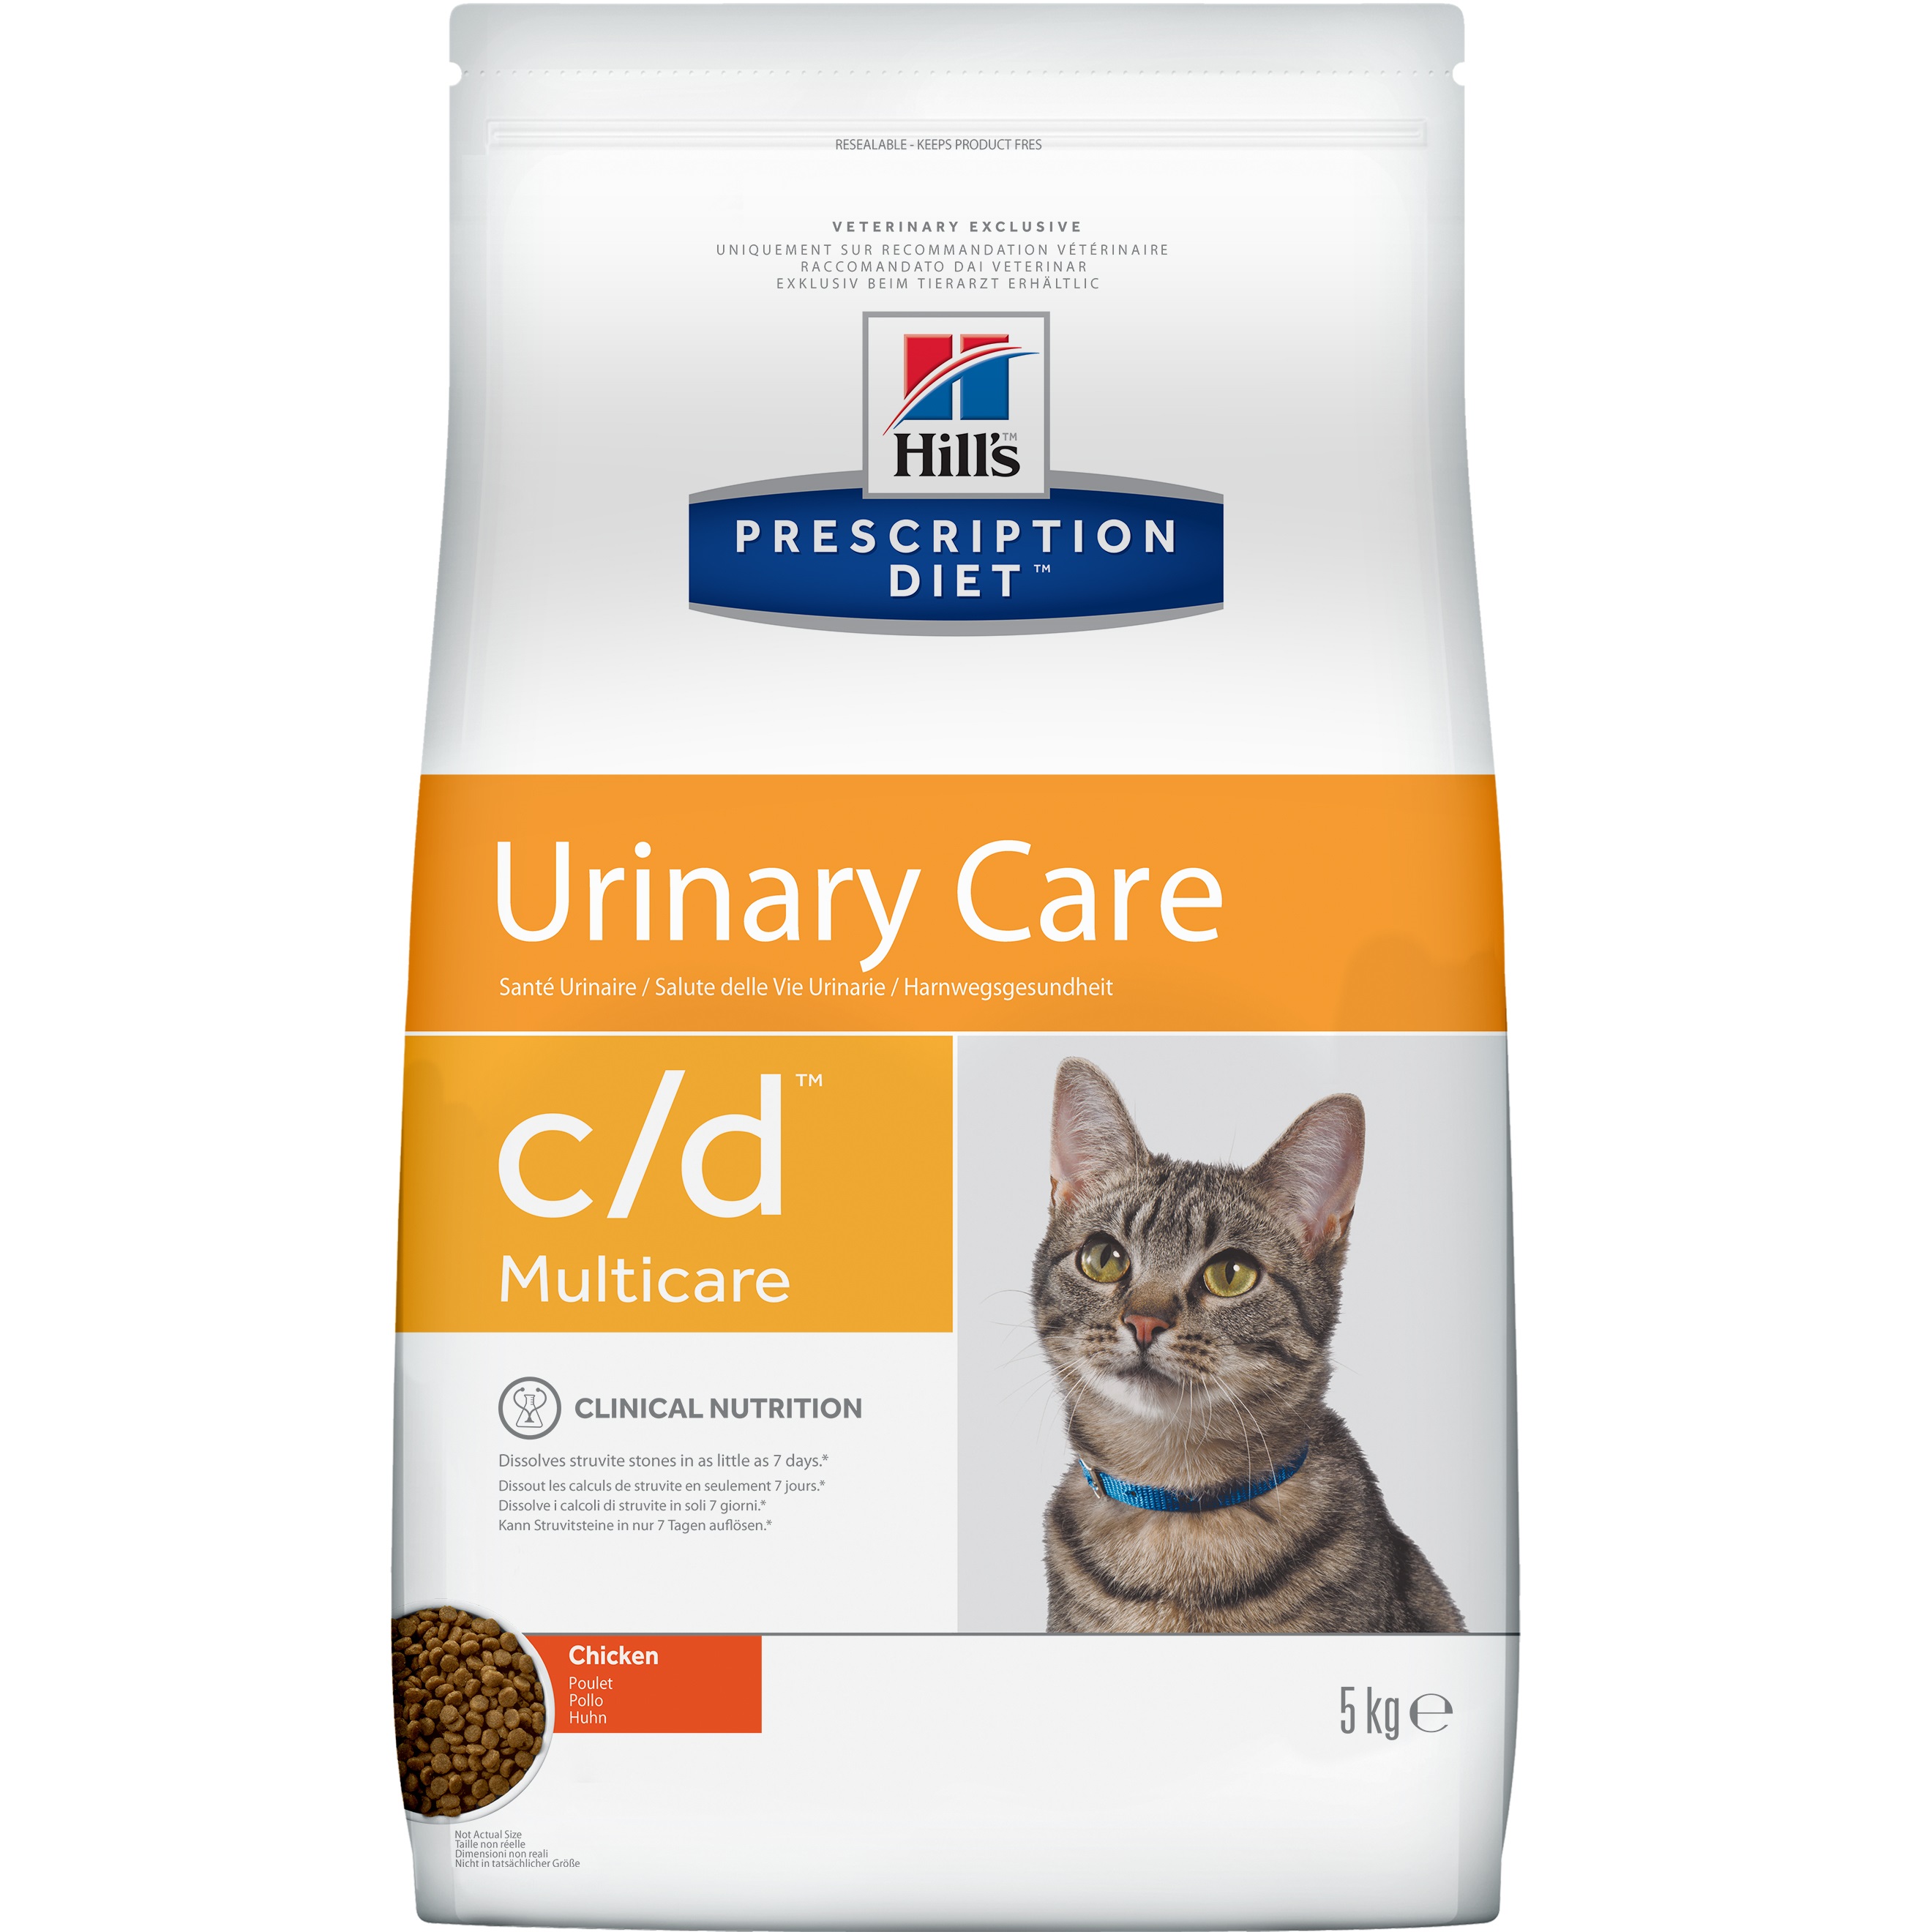 Hill's Prescription Diet c/d Multicare Urinary Care сухой корм для кошек, лечение цистита и МКБ, с курицей, 5кг